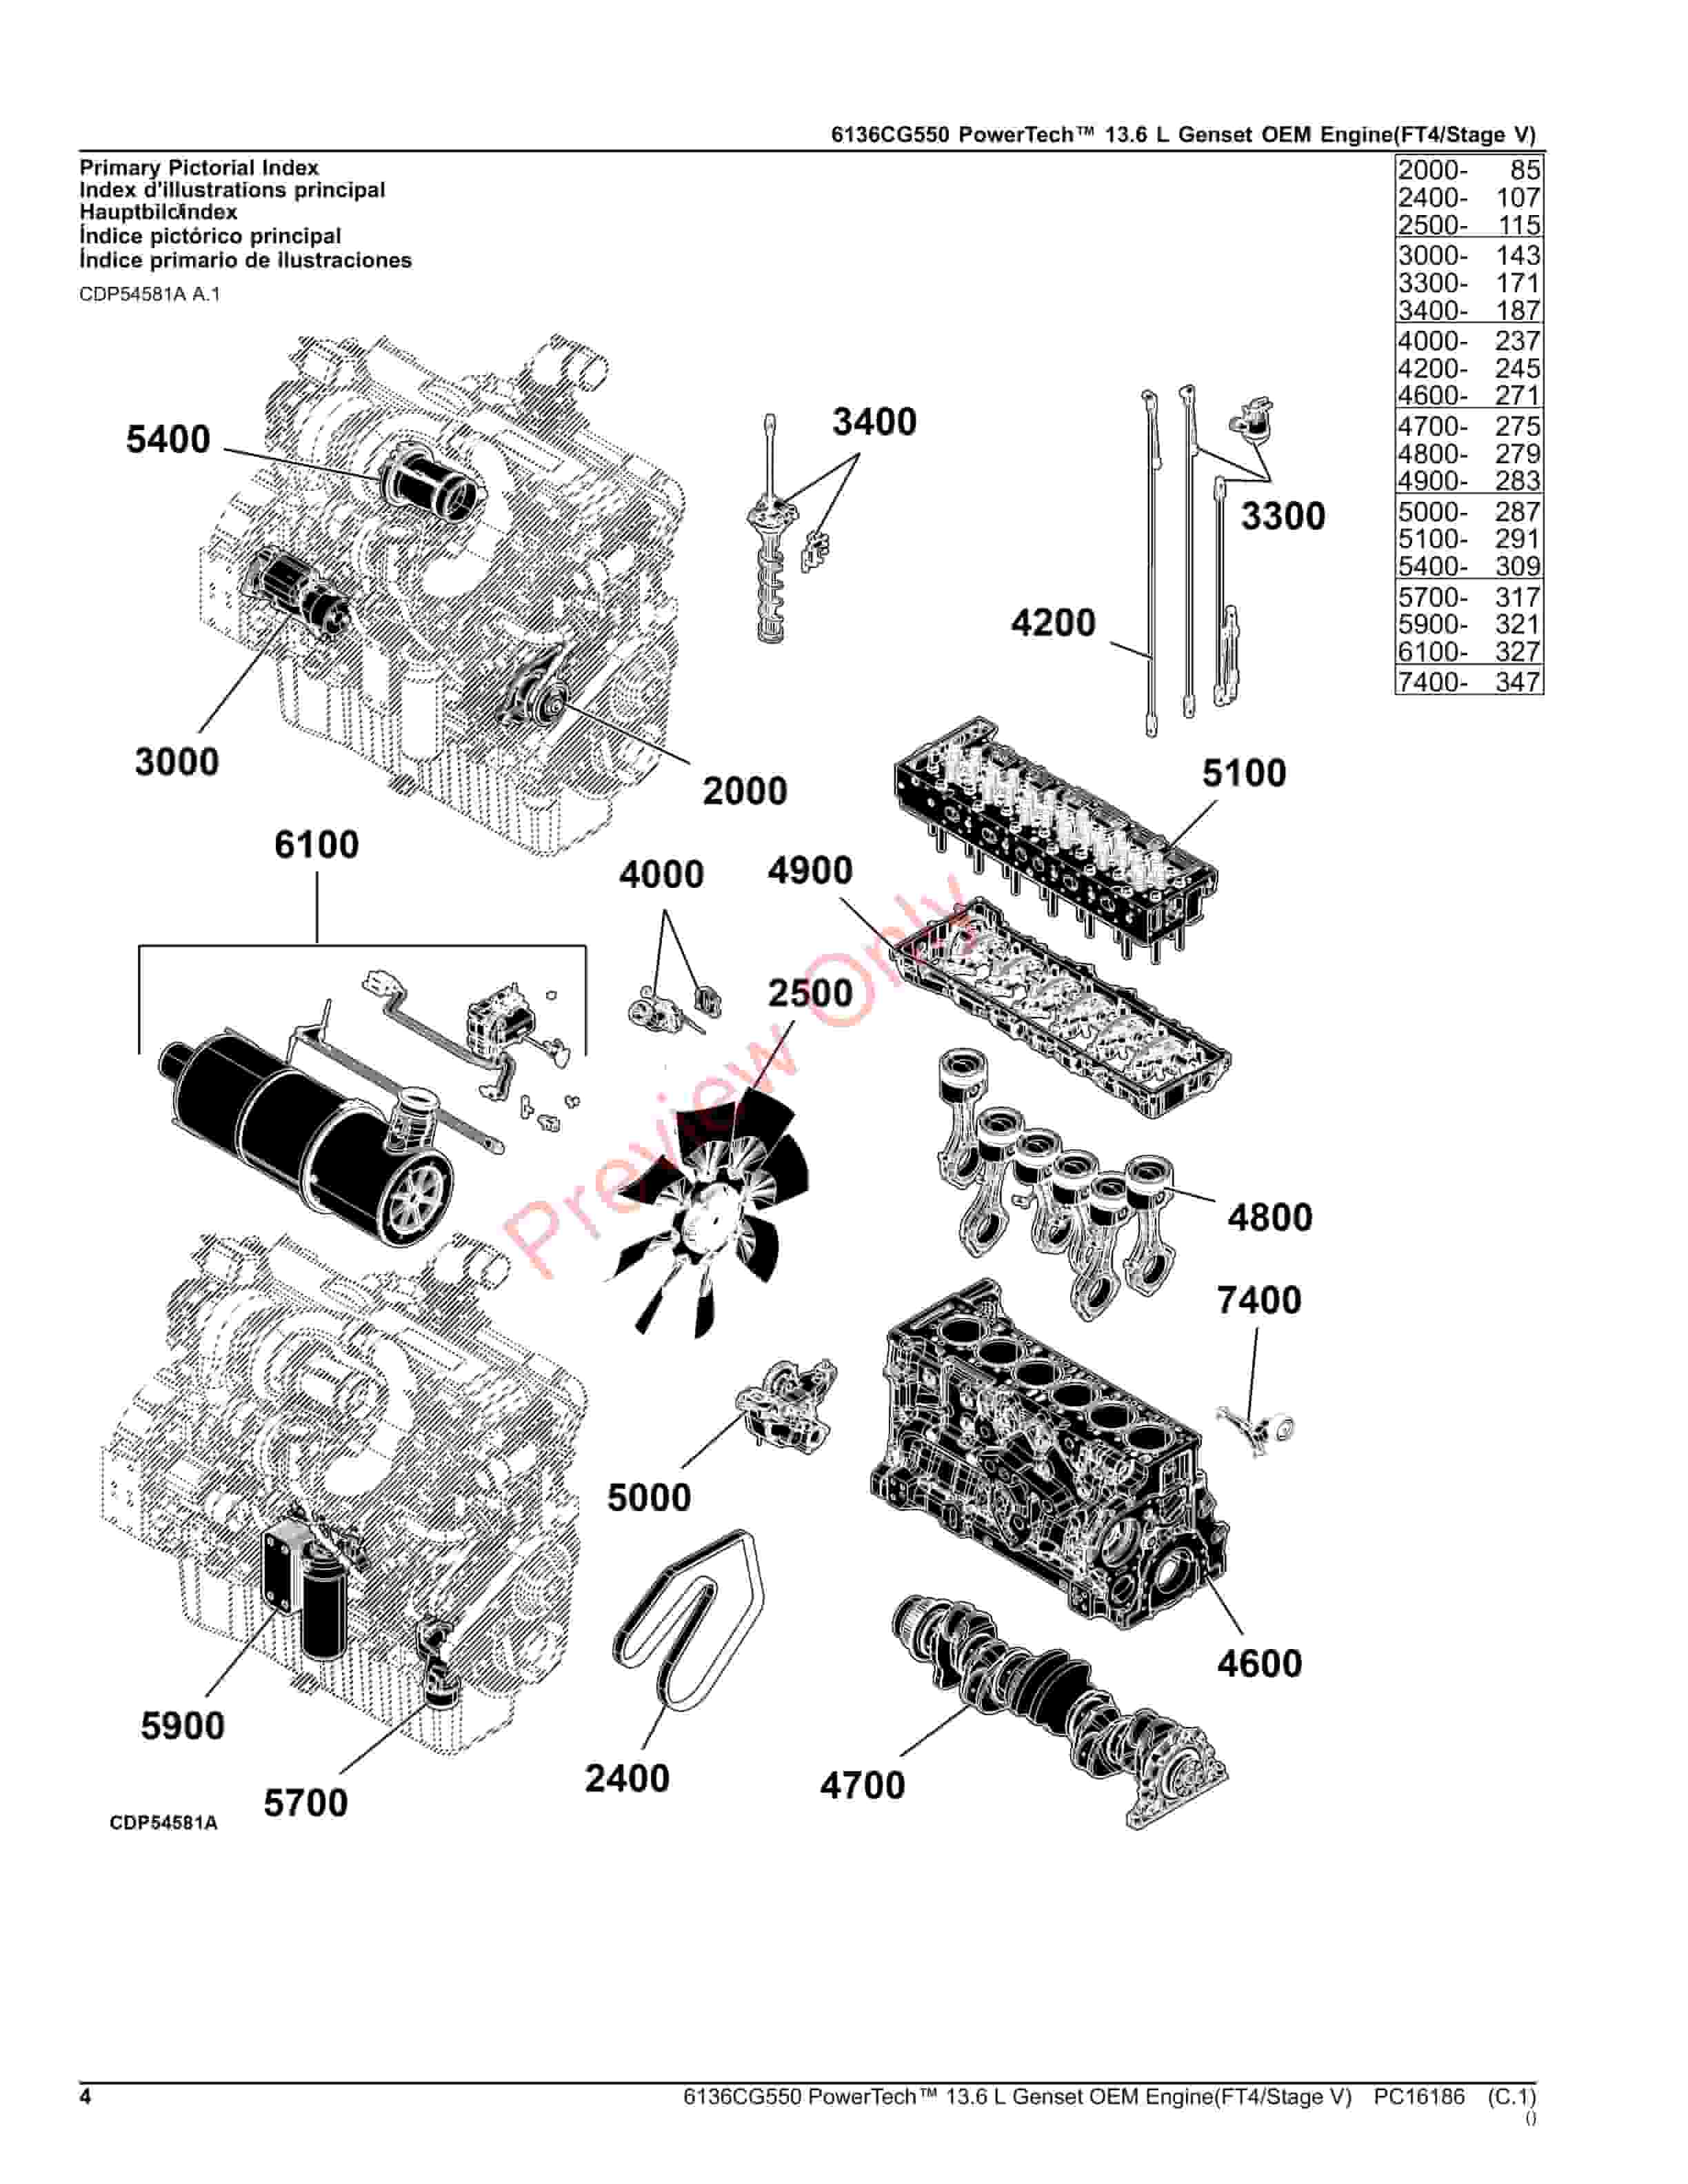 John Deere 6136CG550 PowerTech 13.6 L Genset OEM Engine(FT4Stage V) Parts Catalog PC16186 20JUL23-4